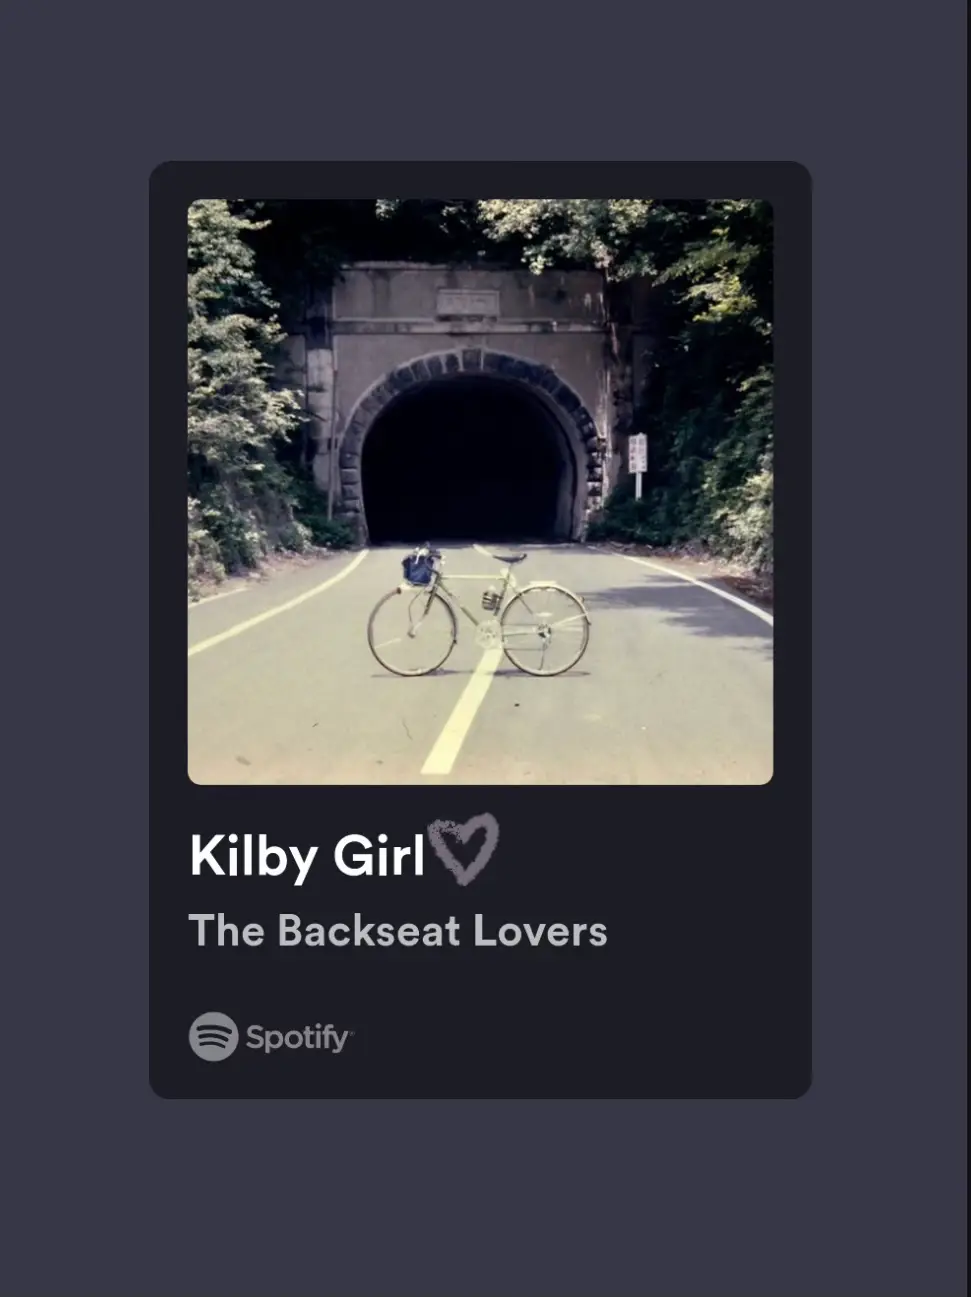  A Spotify playlist of music by Kilby Girl.